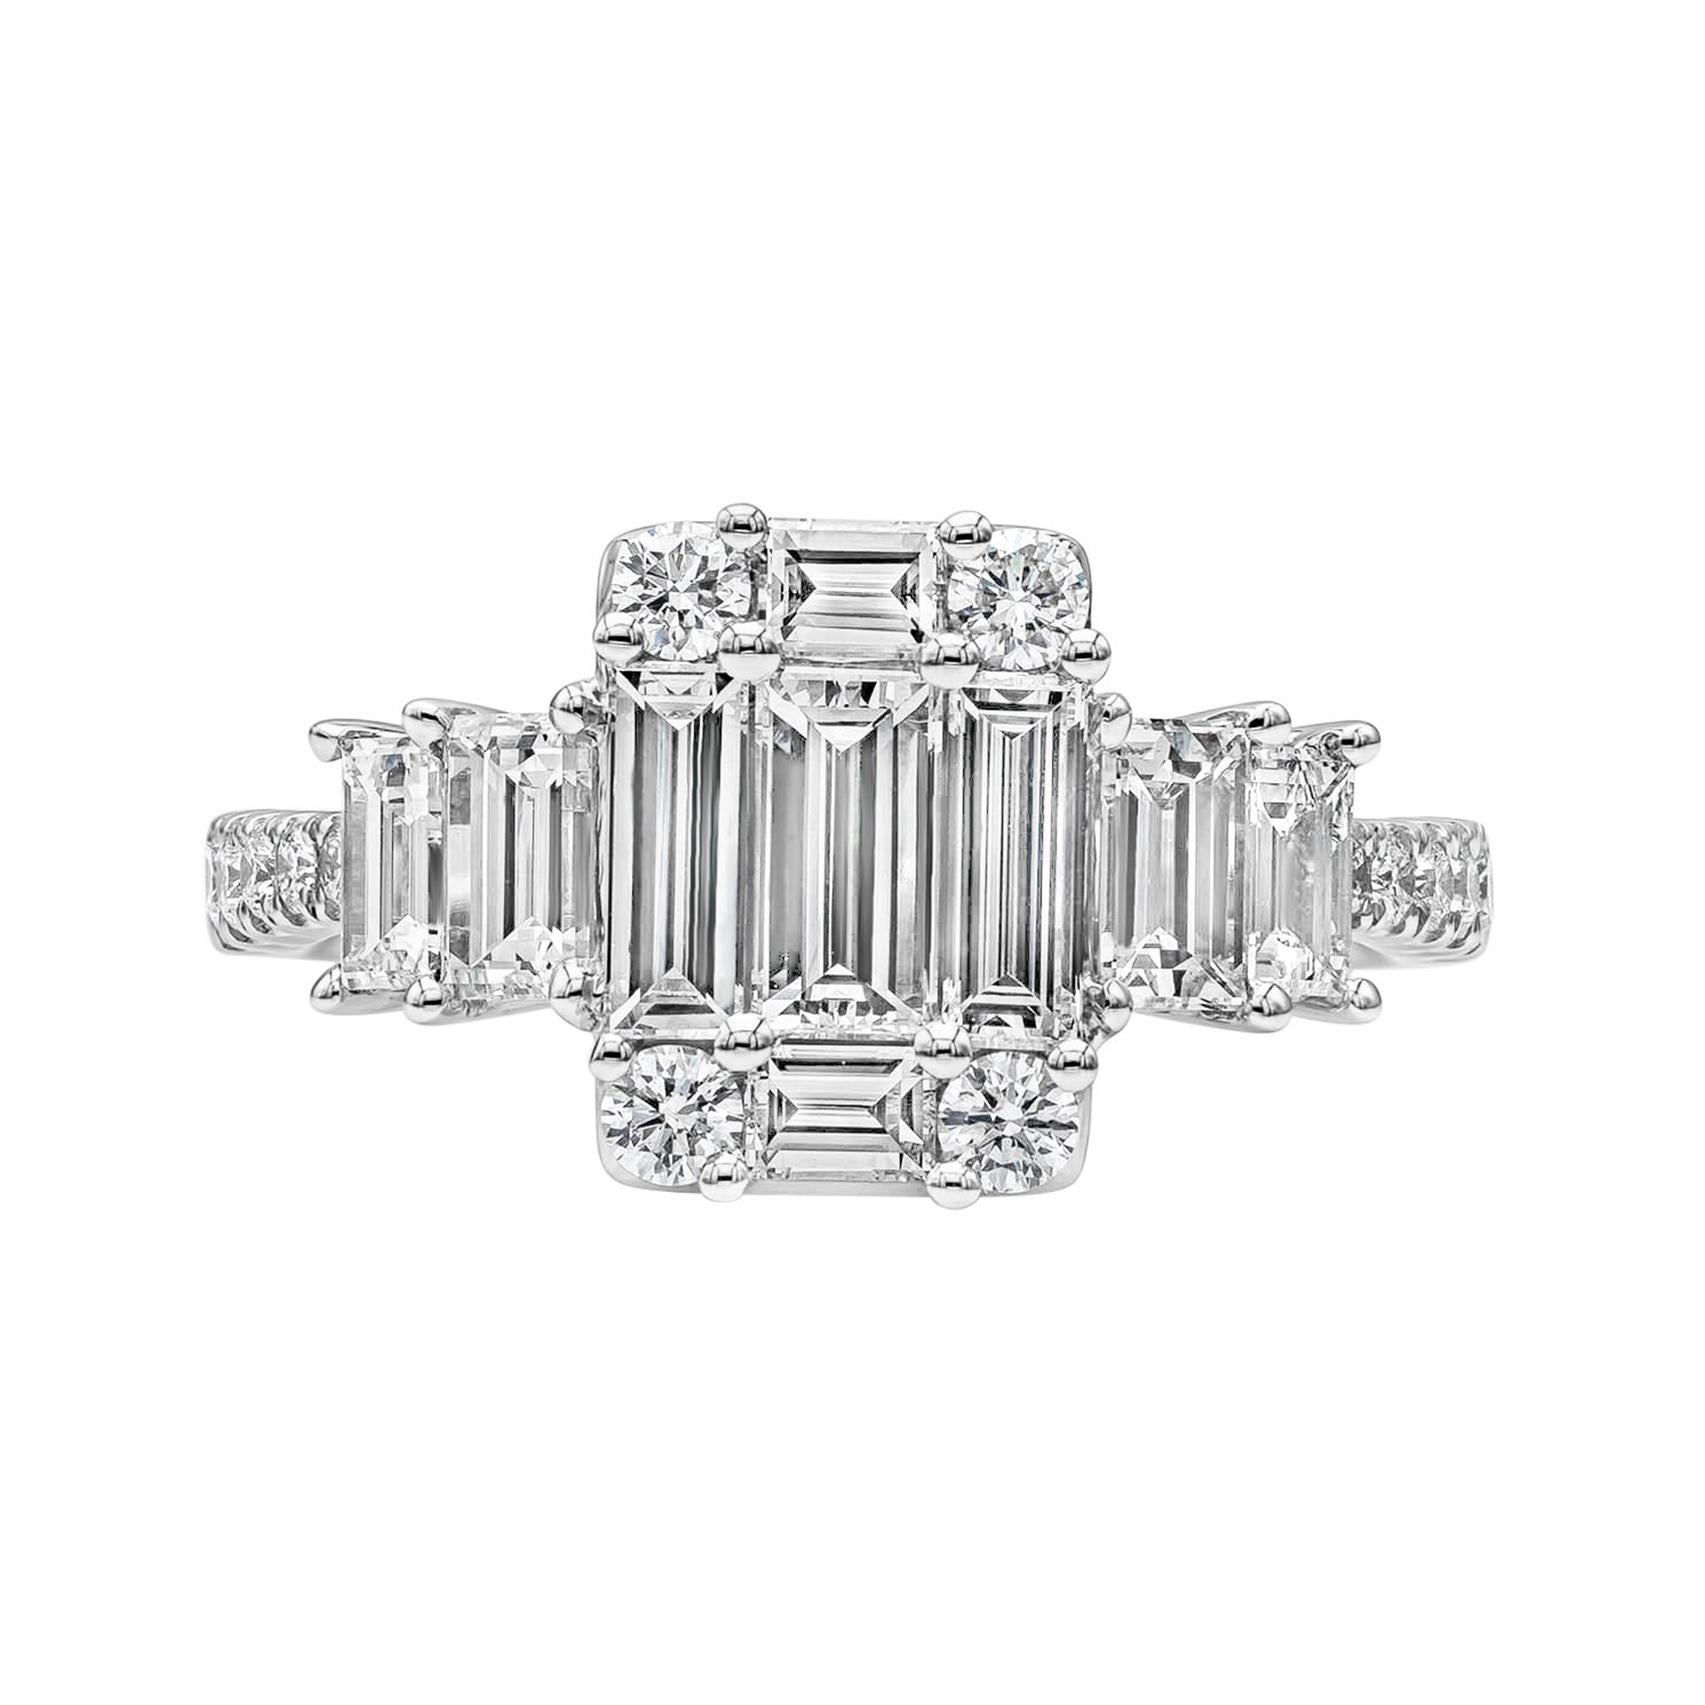 1.51 Carats Total Baguette Cut Illusion Diamond Cluster Engagement Ring For Sale